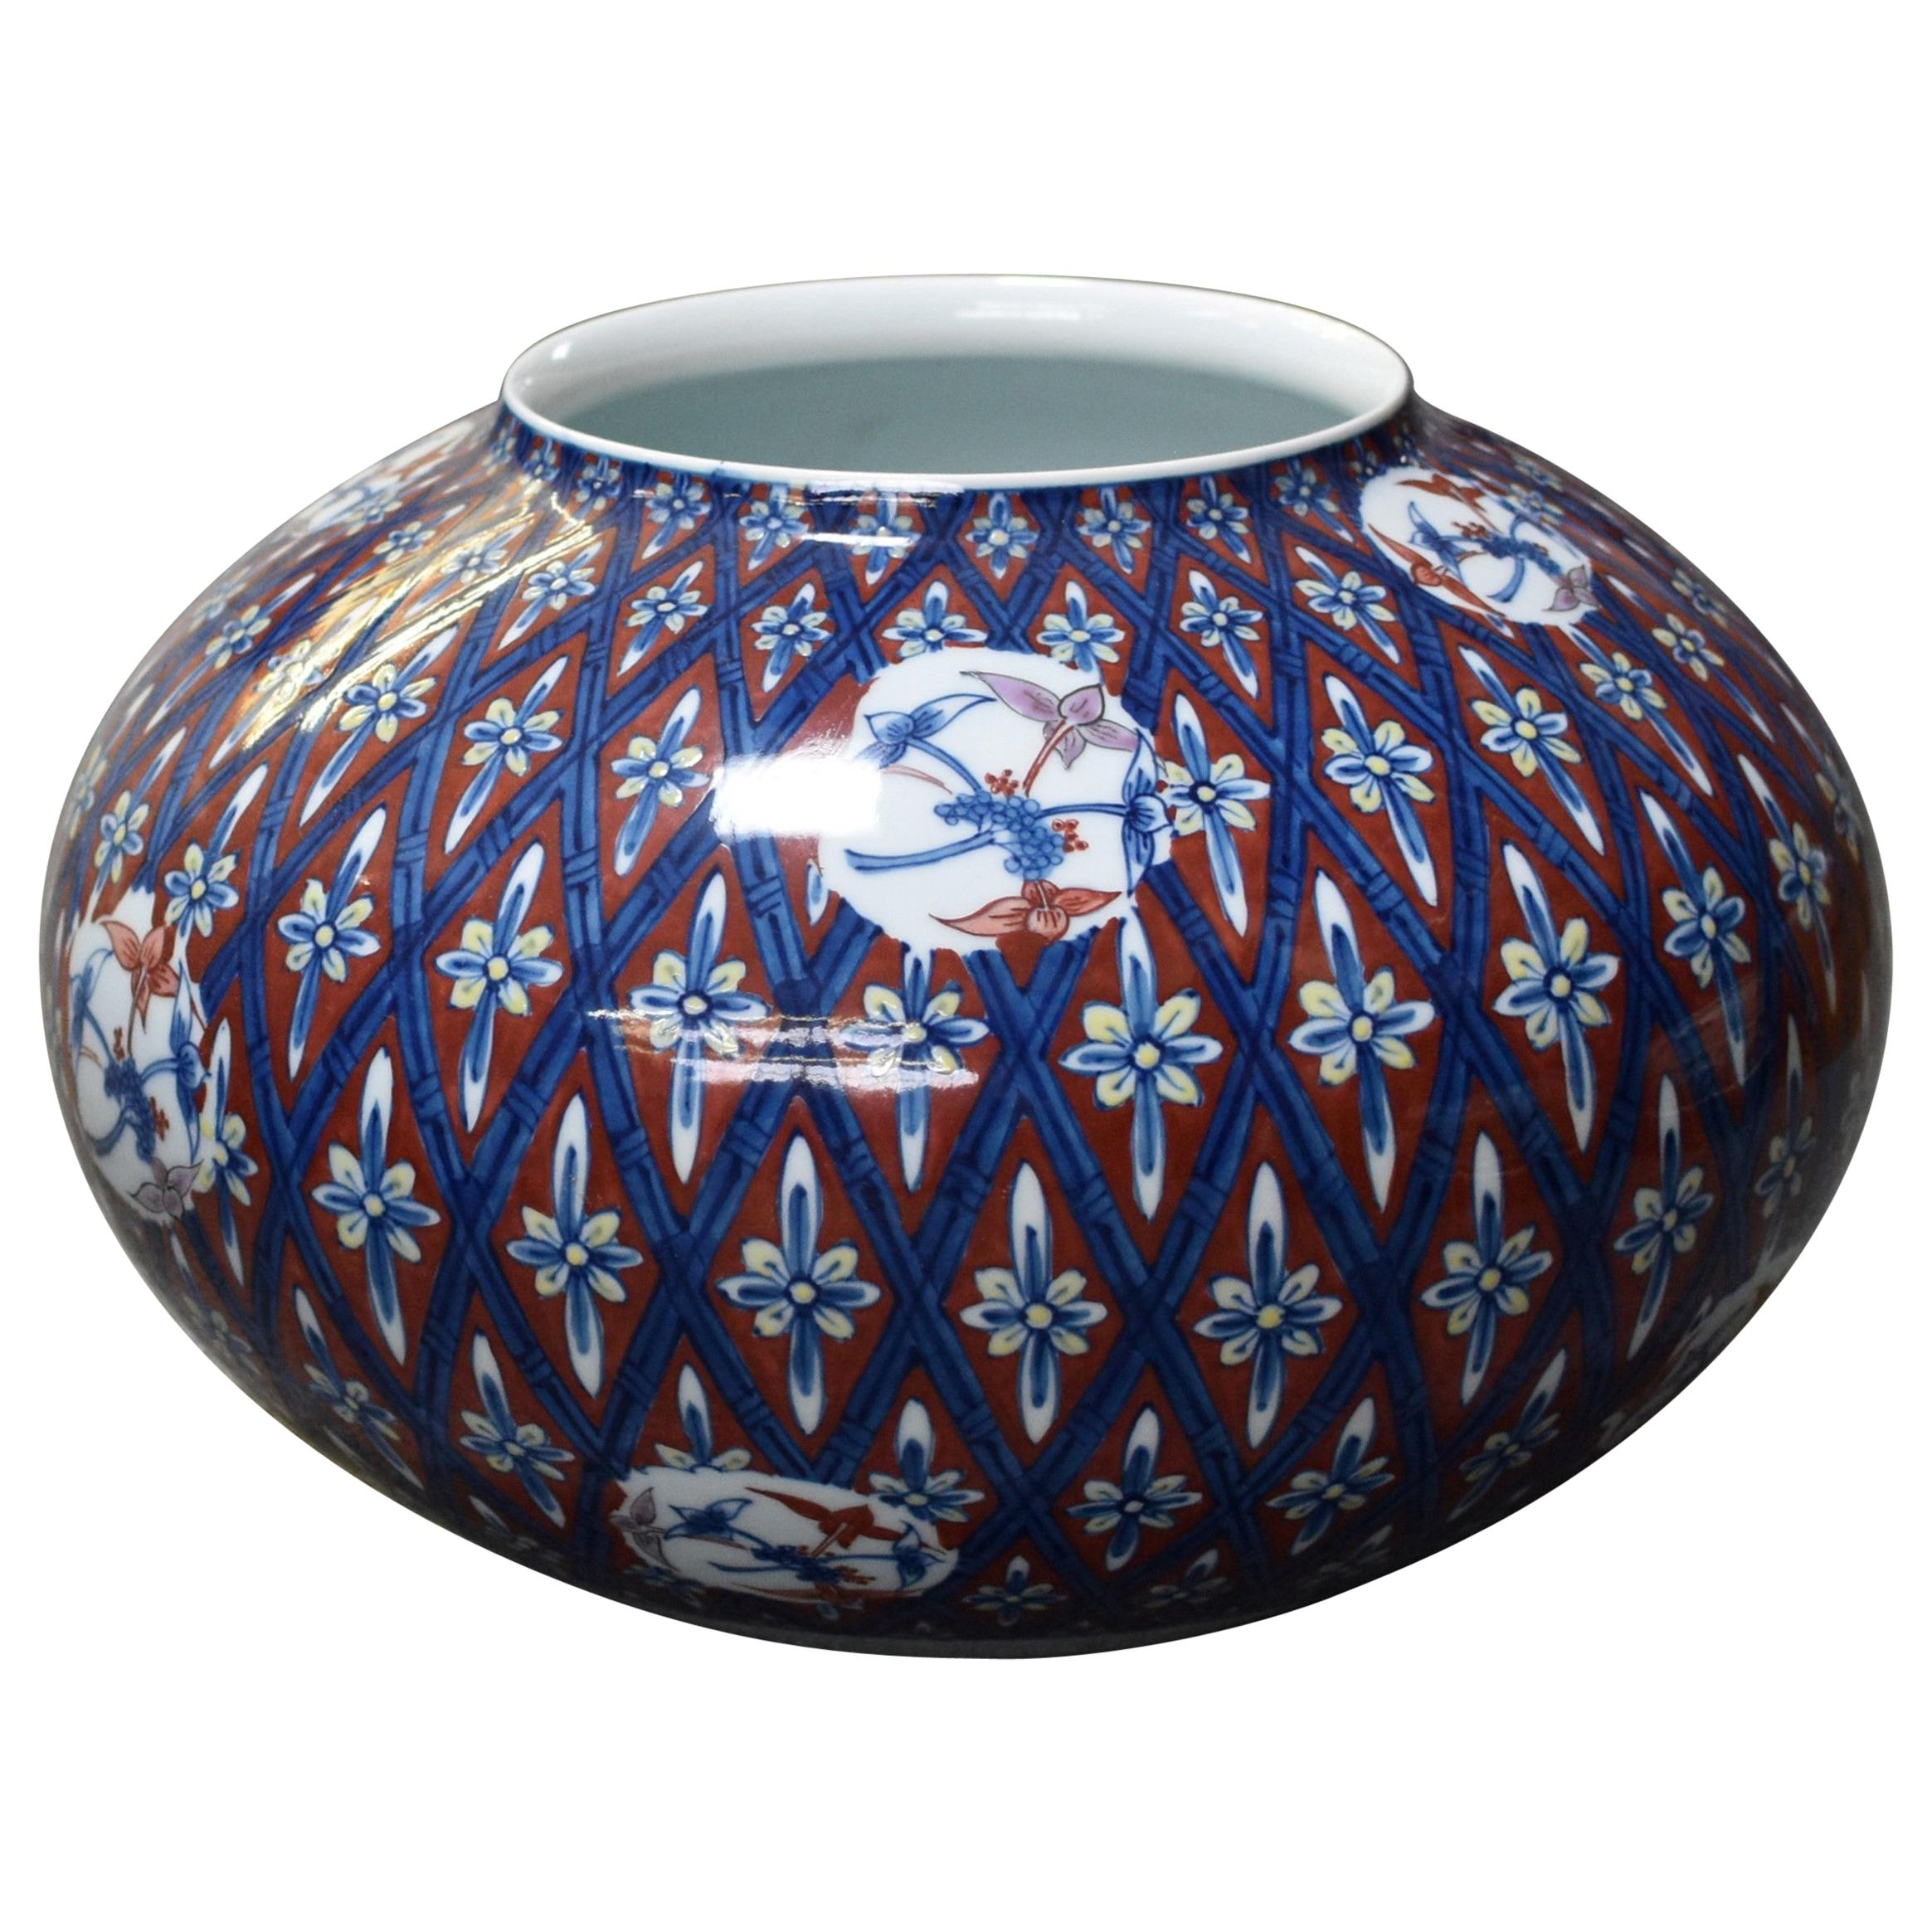 Japanese Contemporary Blue Red White Porcelain Vase by Master Artist, 3